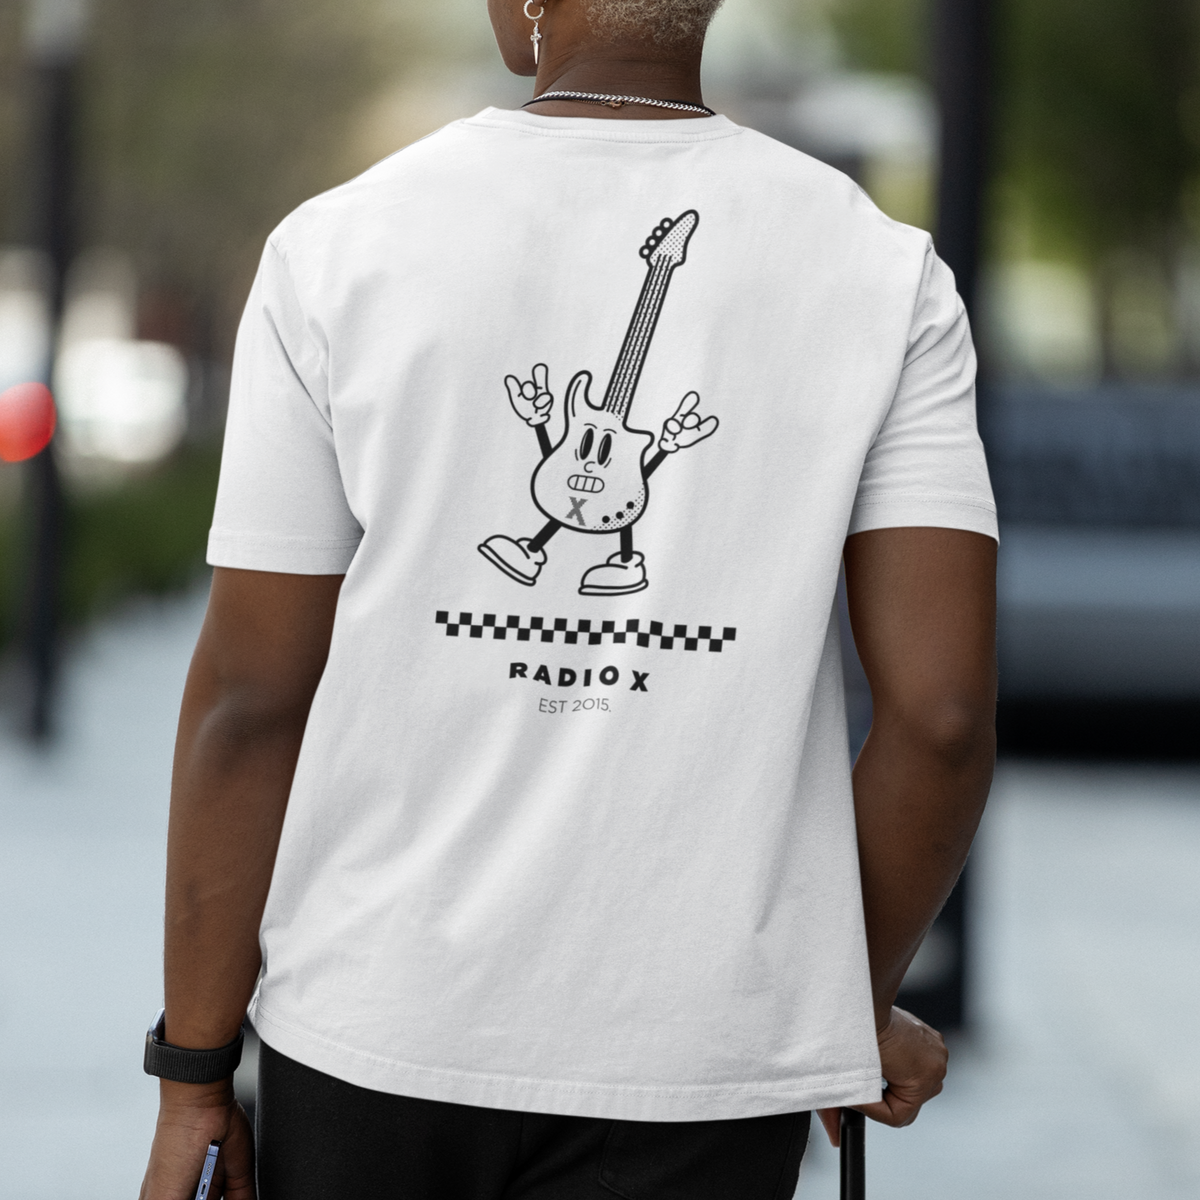 Guitar Radio X T-Shirt